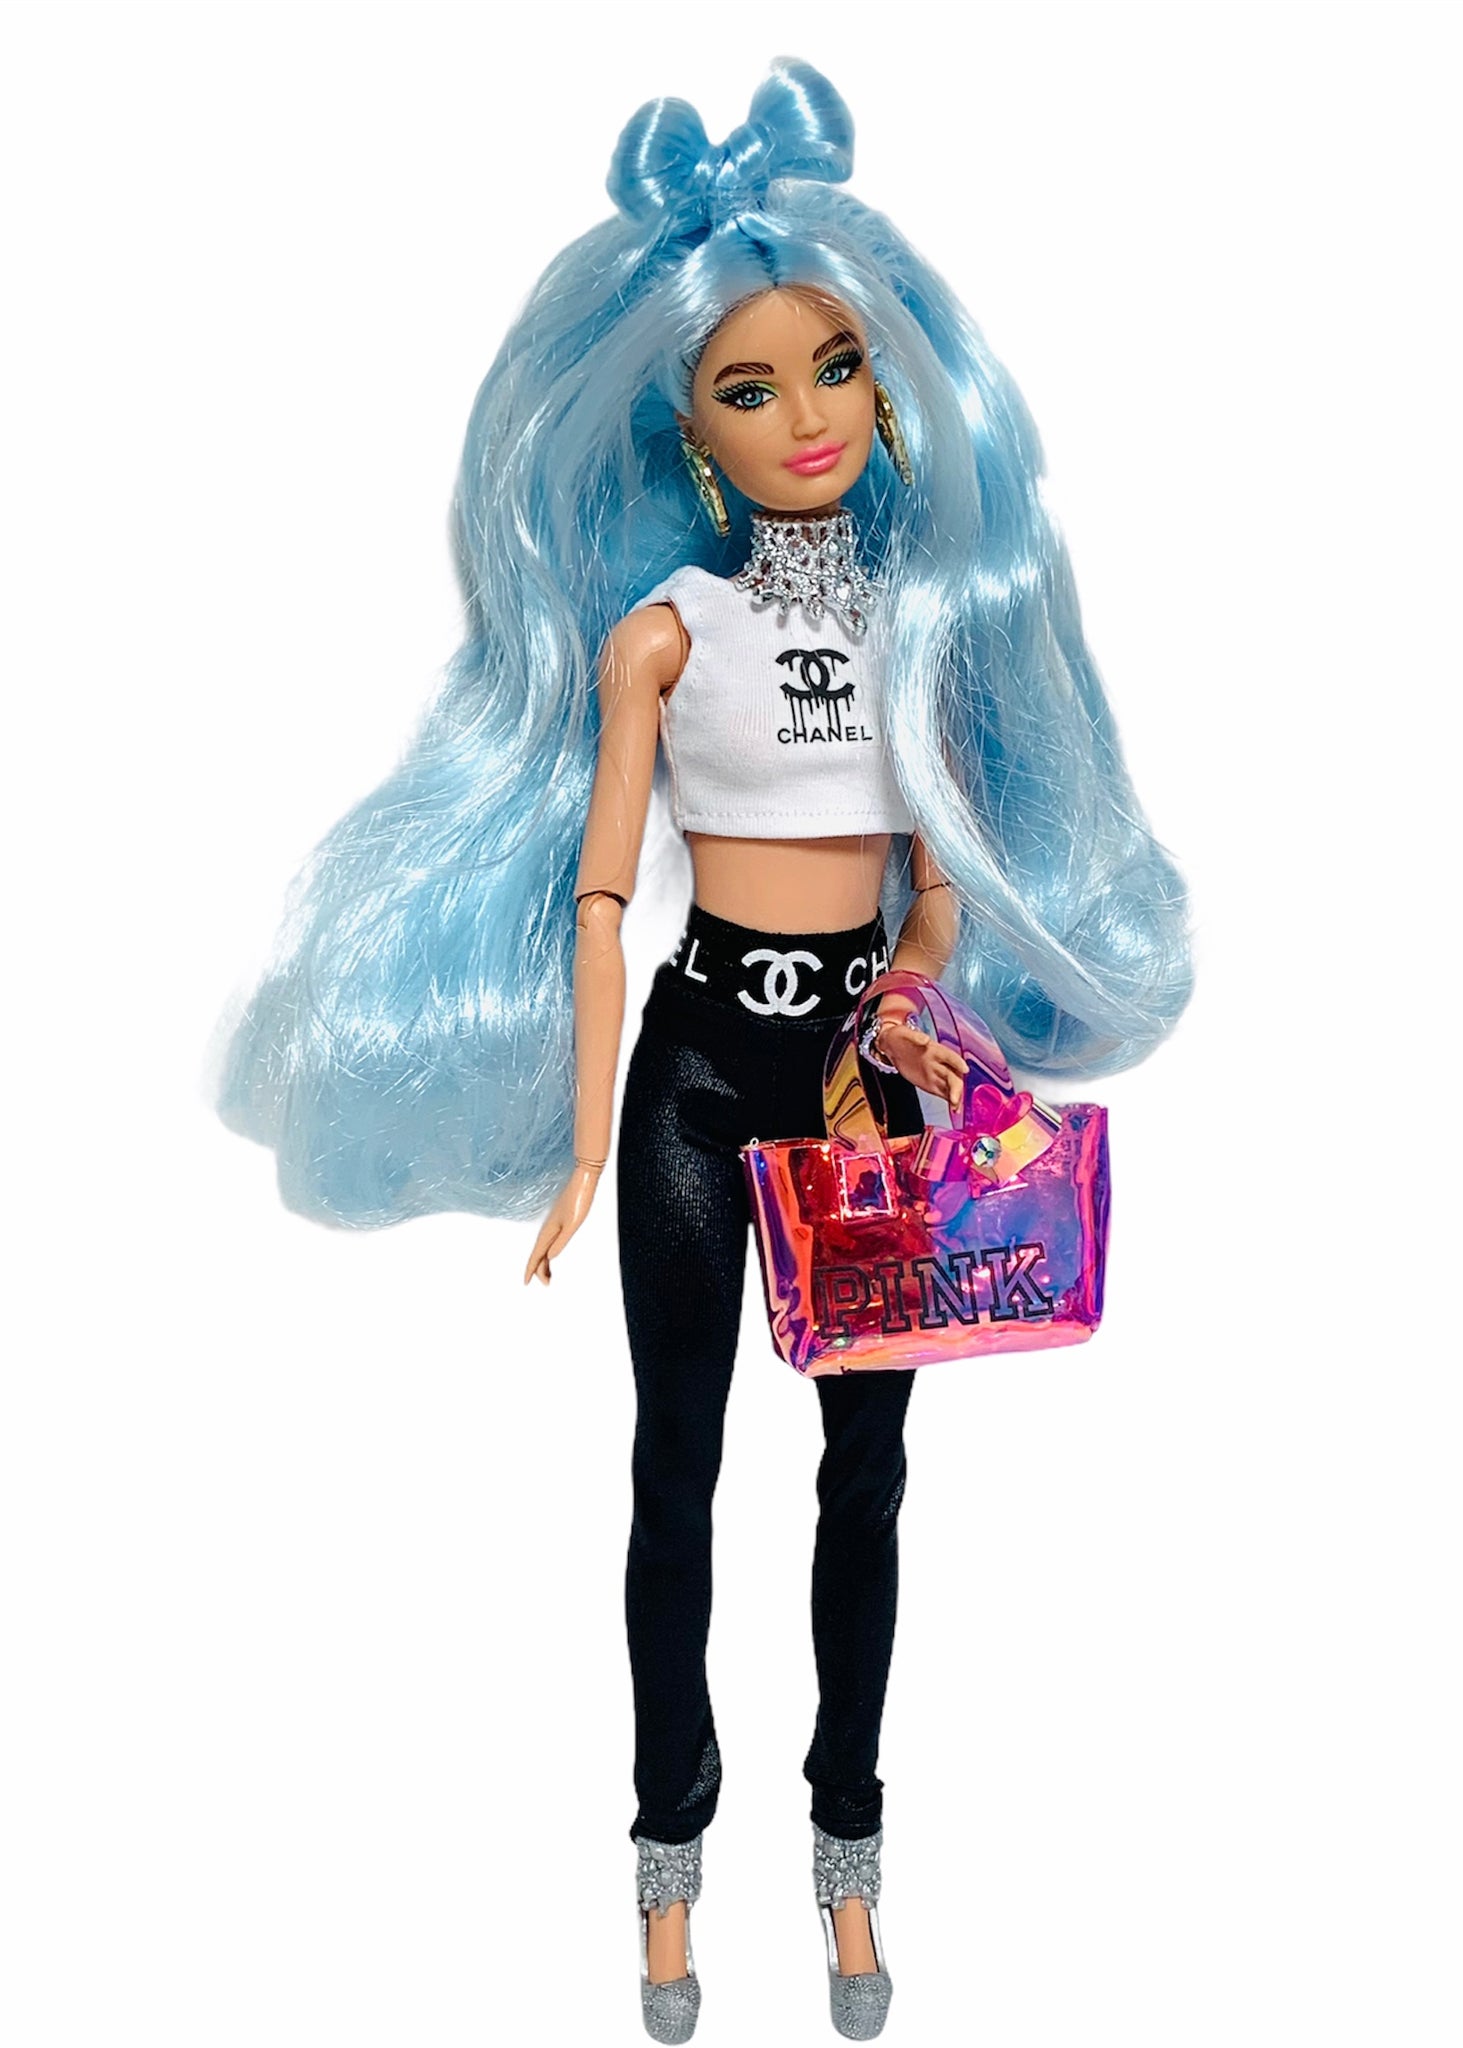 Herinnering Prediken Rand Black leggings for Barbie doll and White crop top – The Doll Tailor